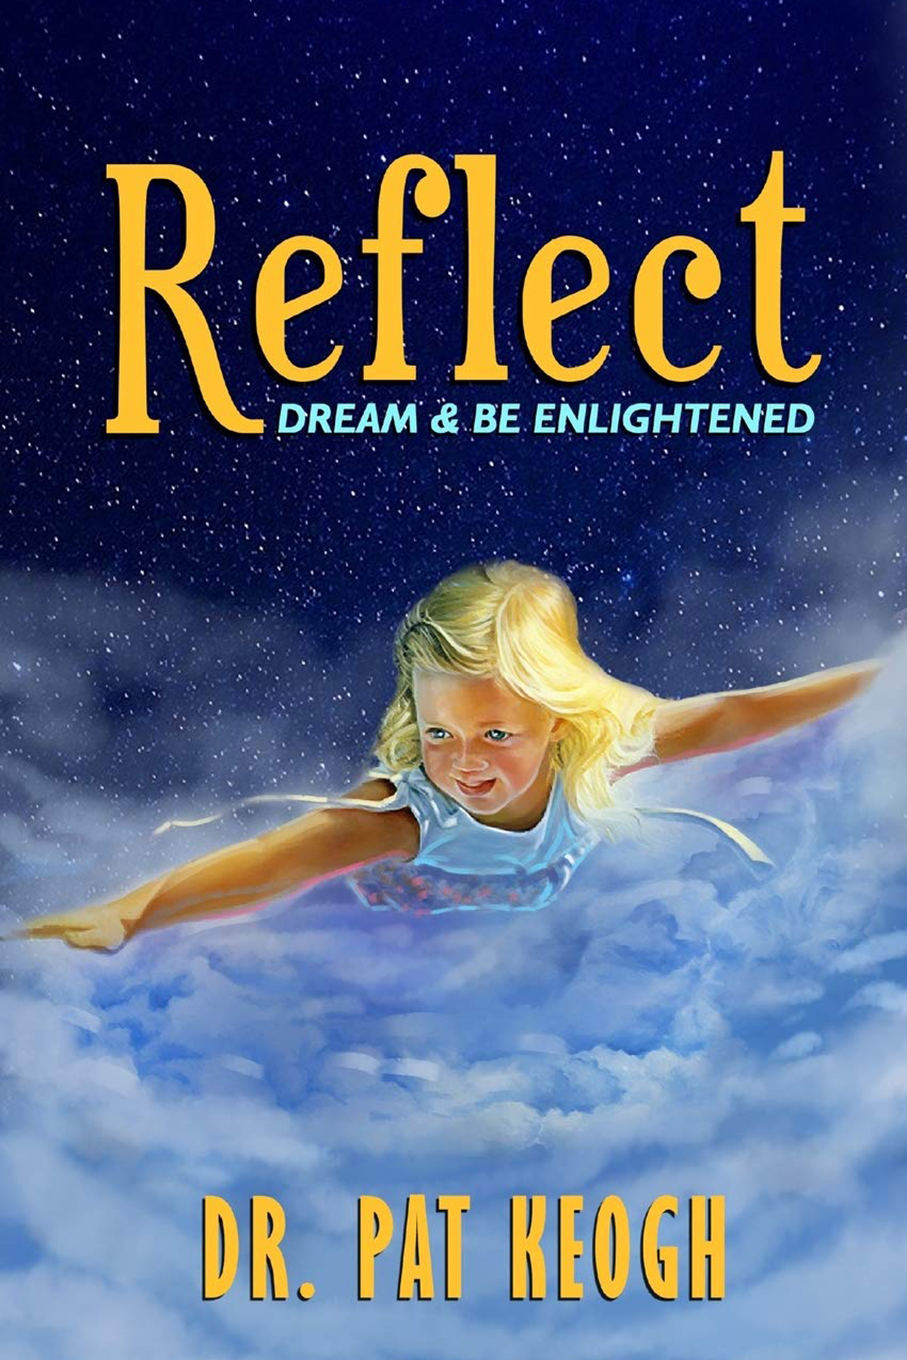 REFLECT: Dream & Be Enlightened